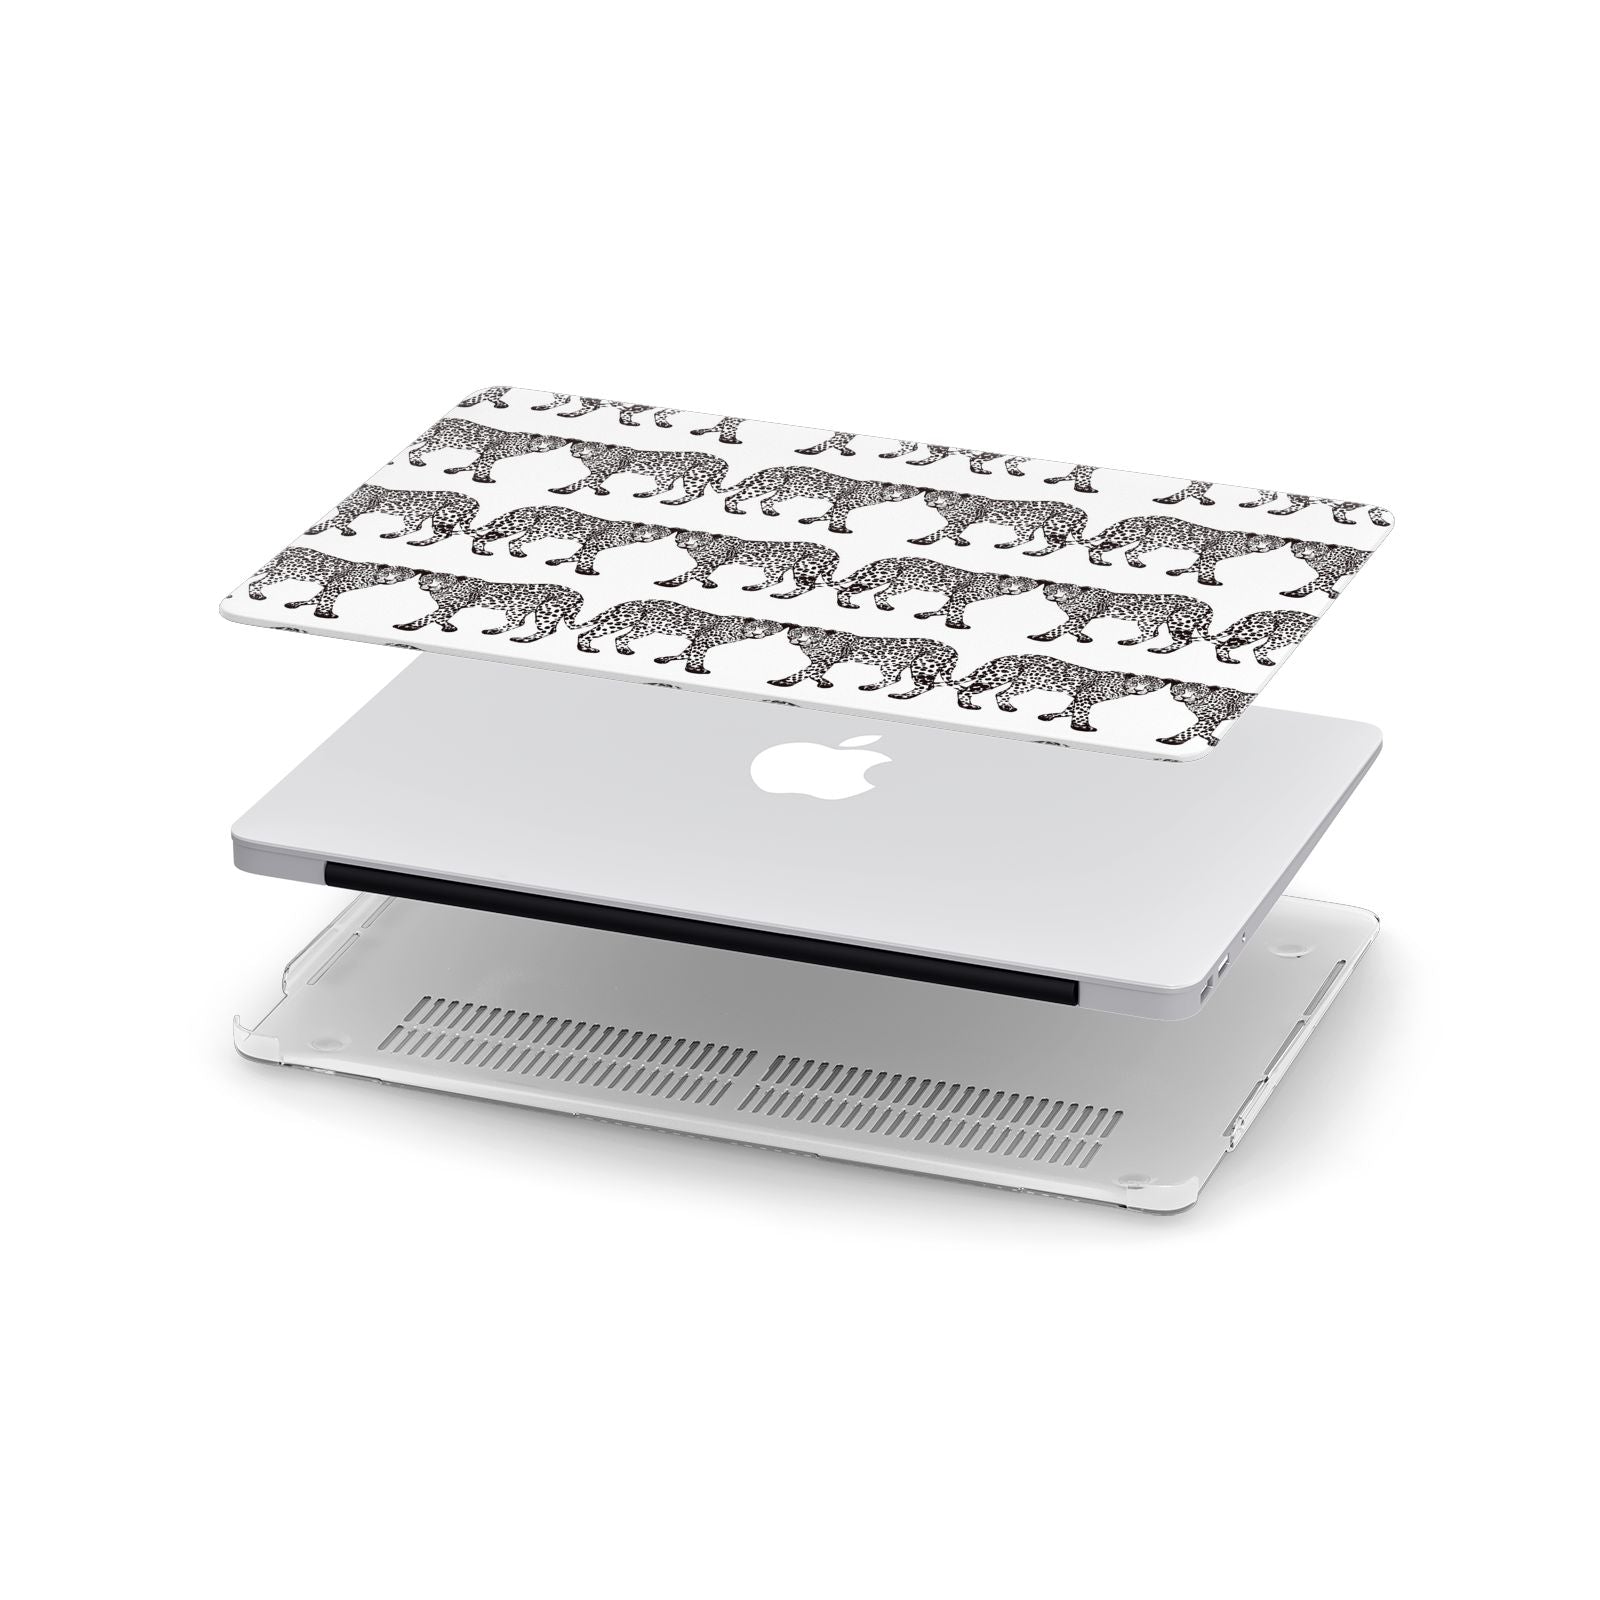 Monochrome Mirrored Leopard Print Apple MacBook Case in Detail